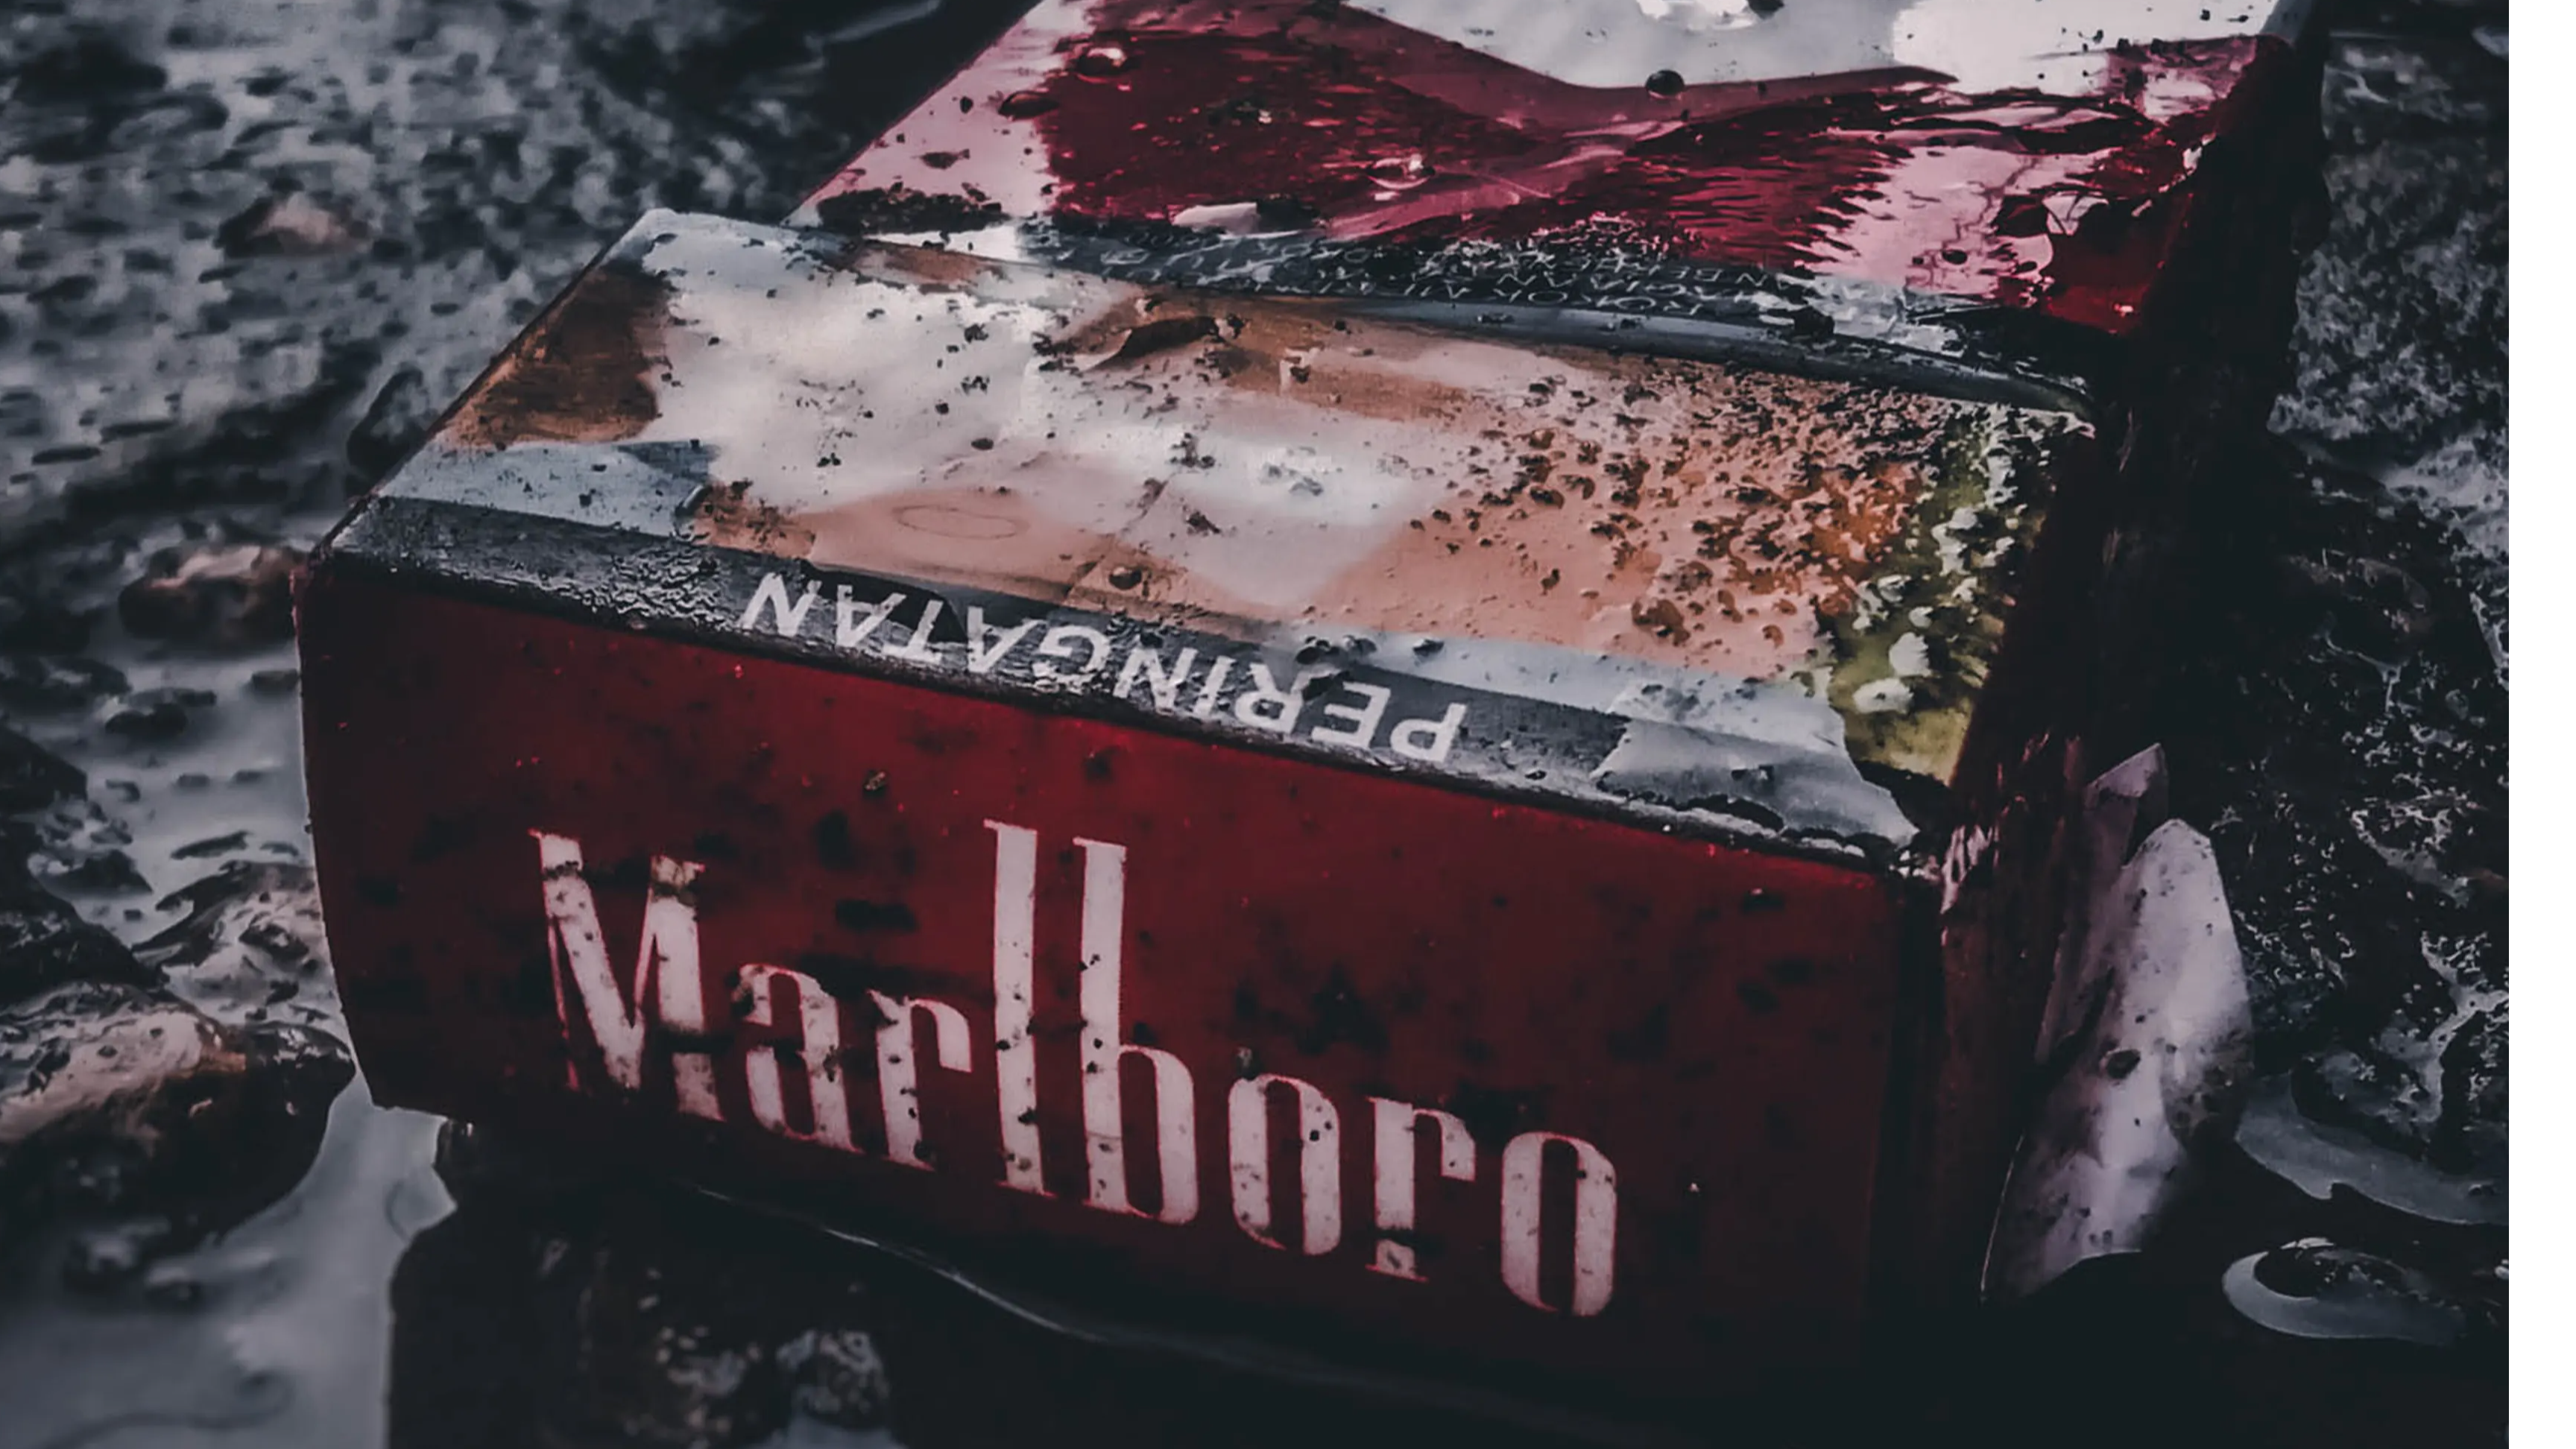 Philip Morris plans to discontinue Marlboro in Britain by 2030